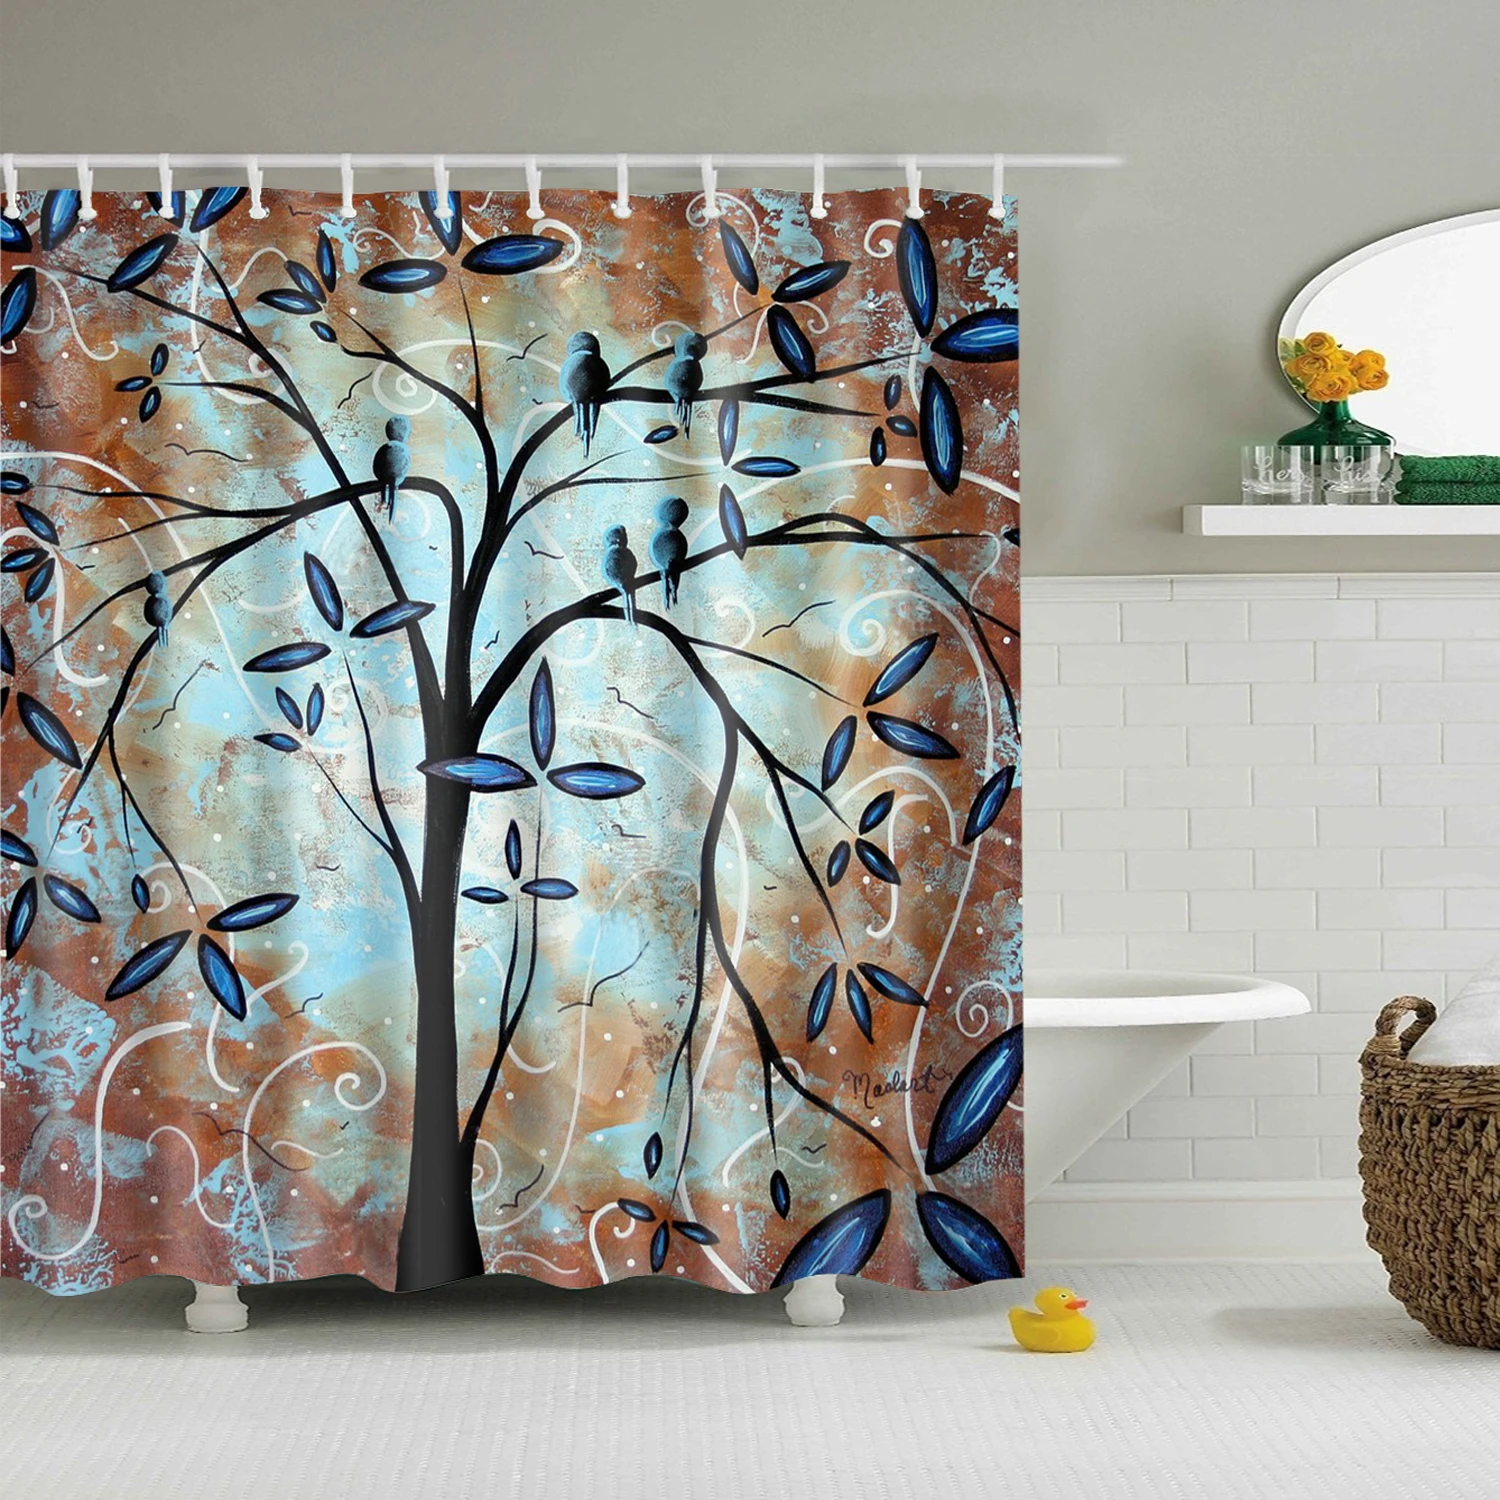 Oil painting print Shower Curtain Long 180x200cm Waterproof polyester blackout 3D print Bath curtain for bathroom curtain